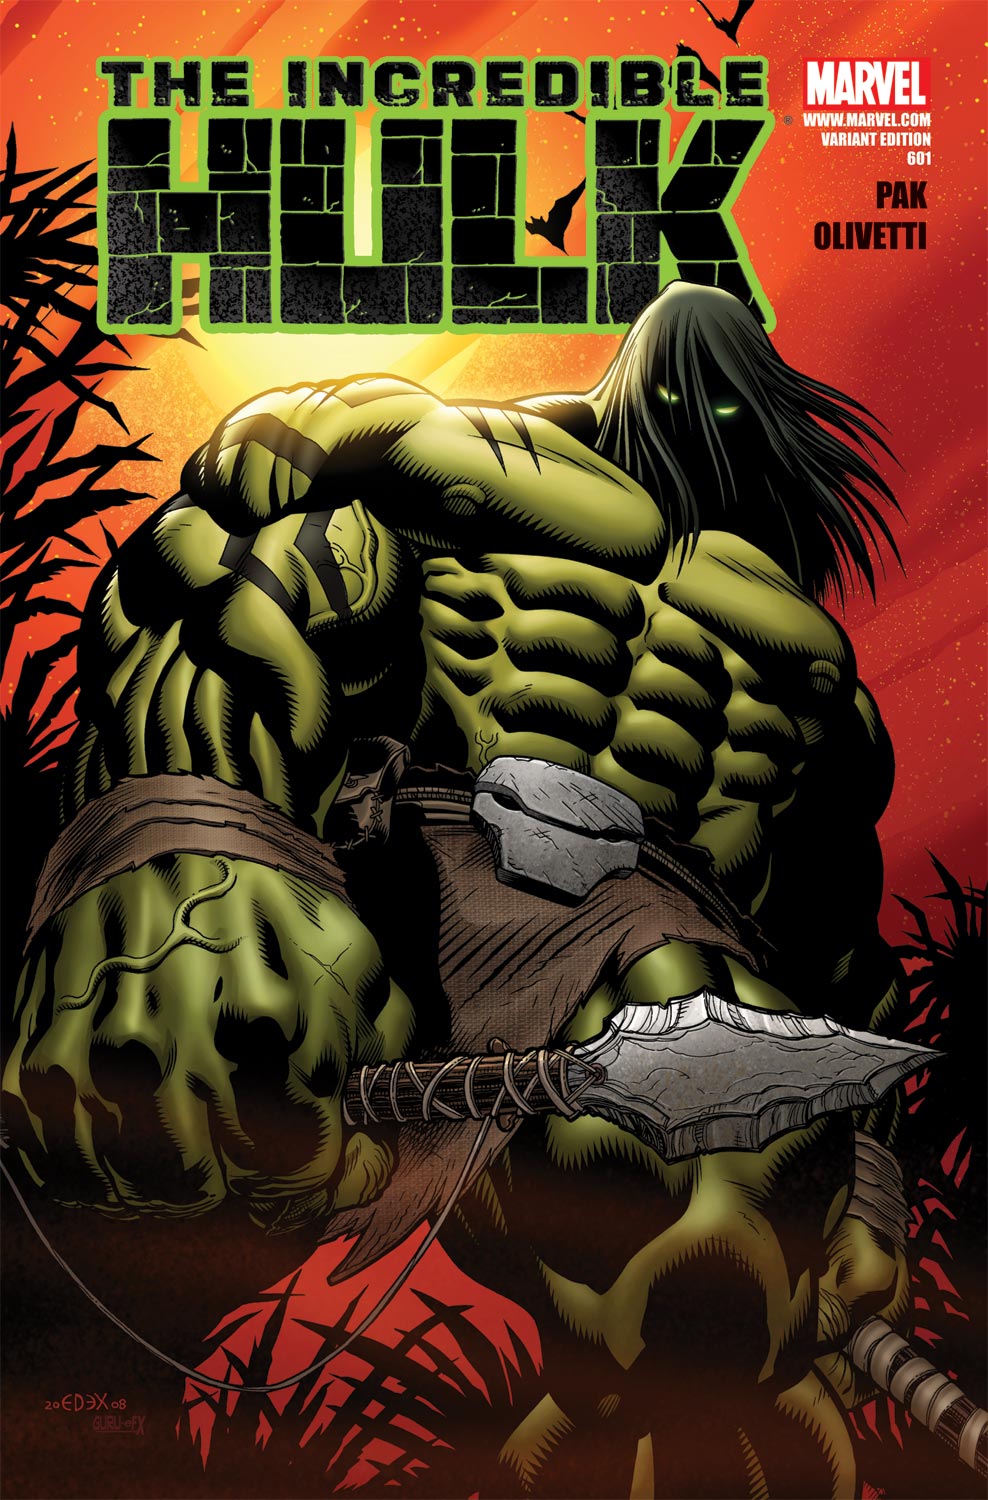 Incredible Hulks (2010) #601 (VARIANT)